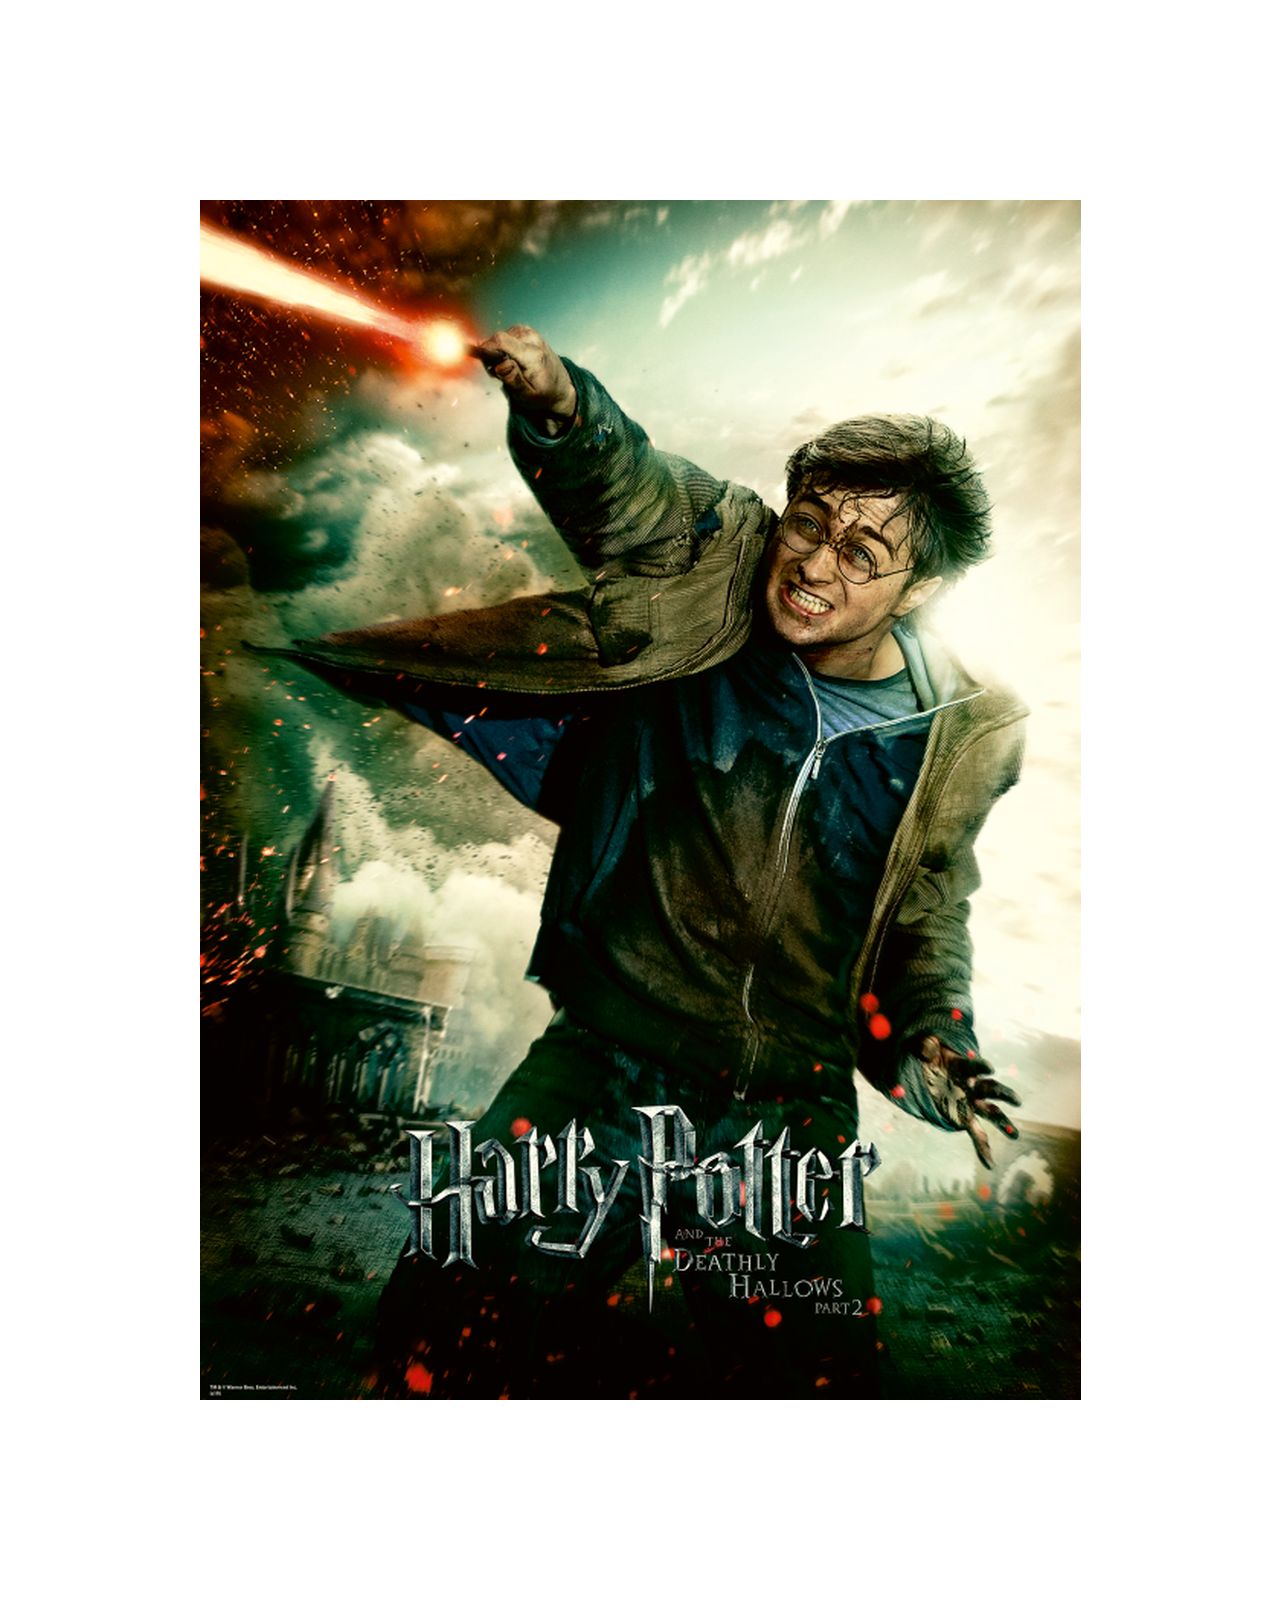 Puzzle super 100 harry potter - Harry Potter, RAVENSBURGER